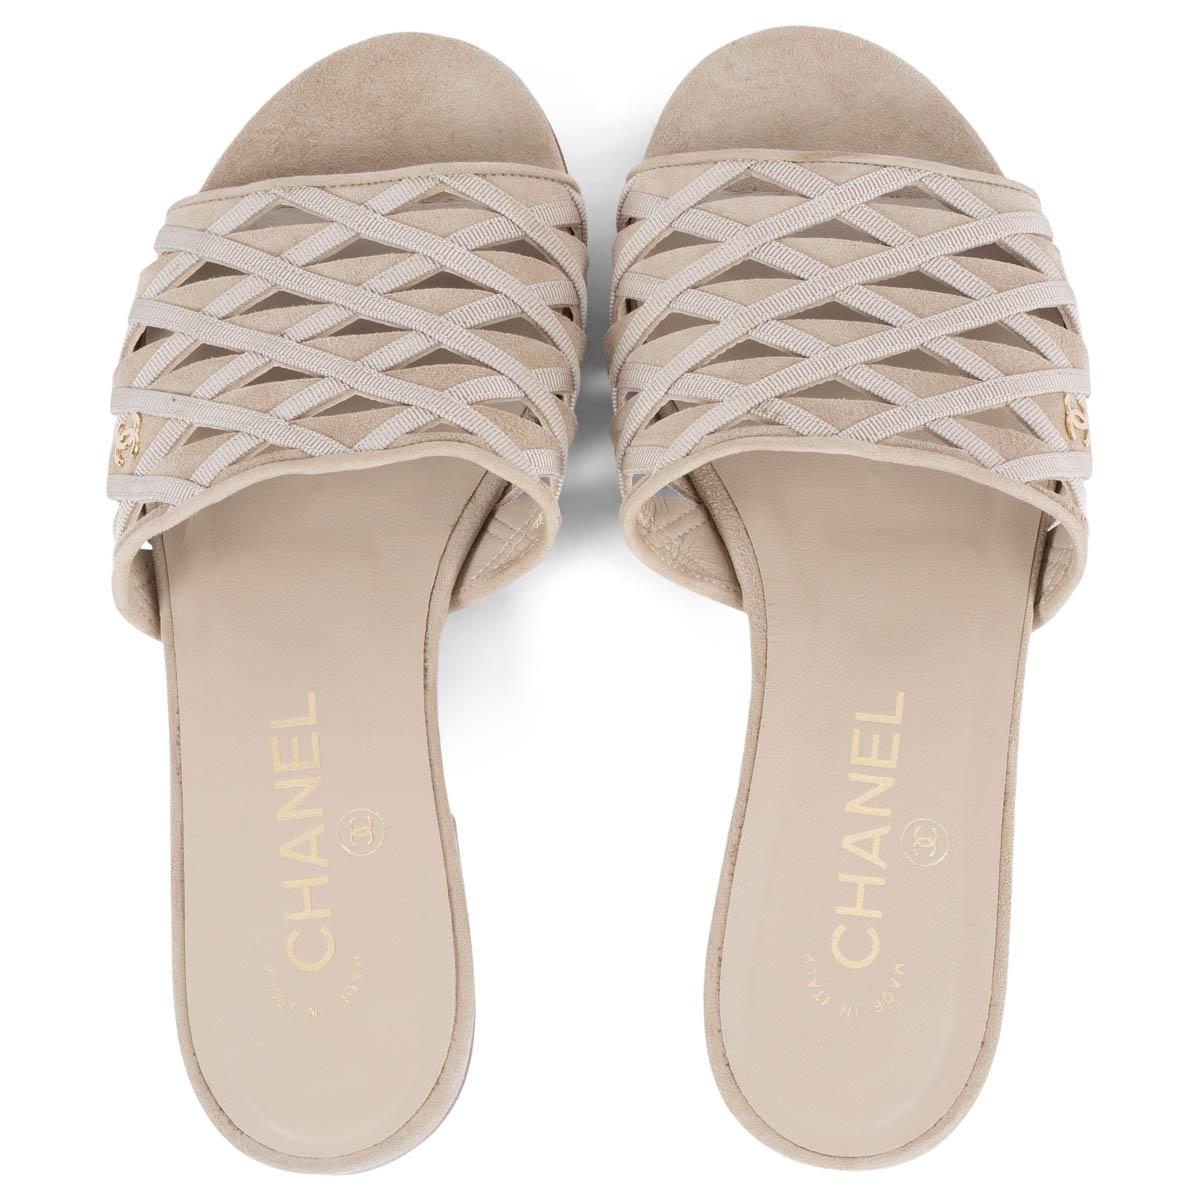 CHANEL nude suede & grosgrain 2020 SLIDE Sandals Shoes 37 For Sale 1